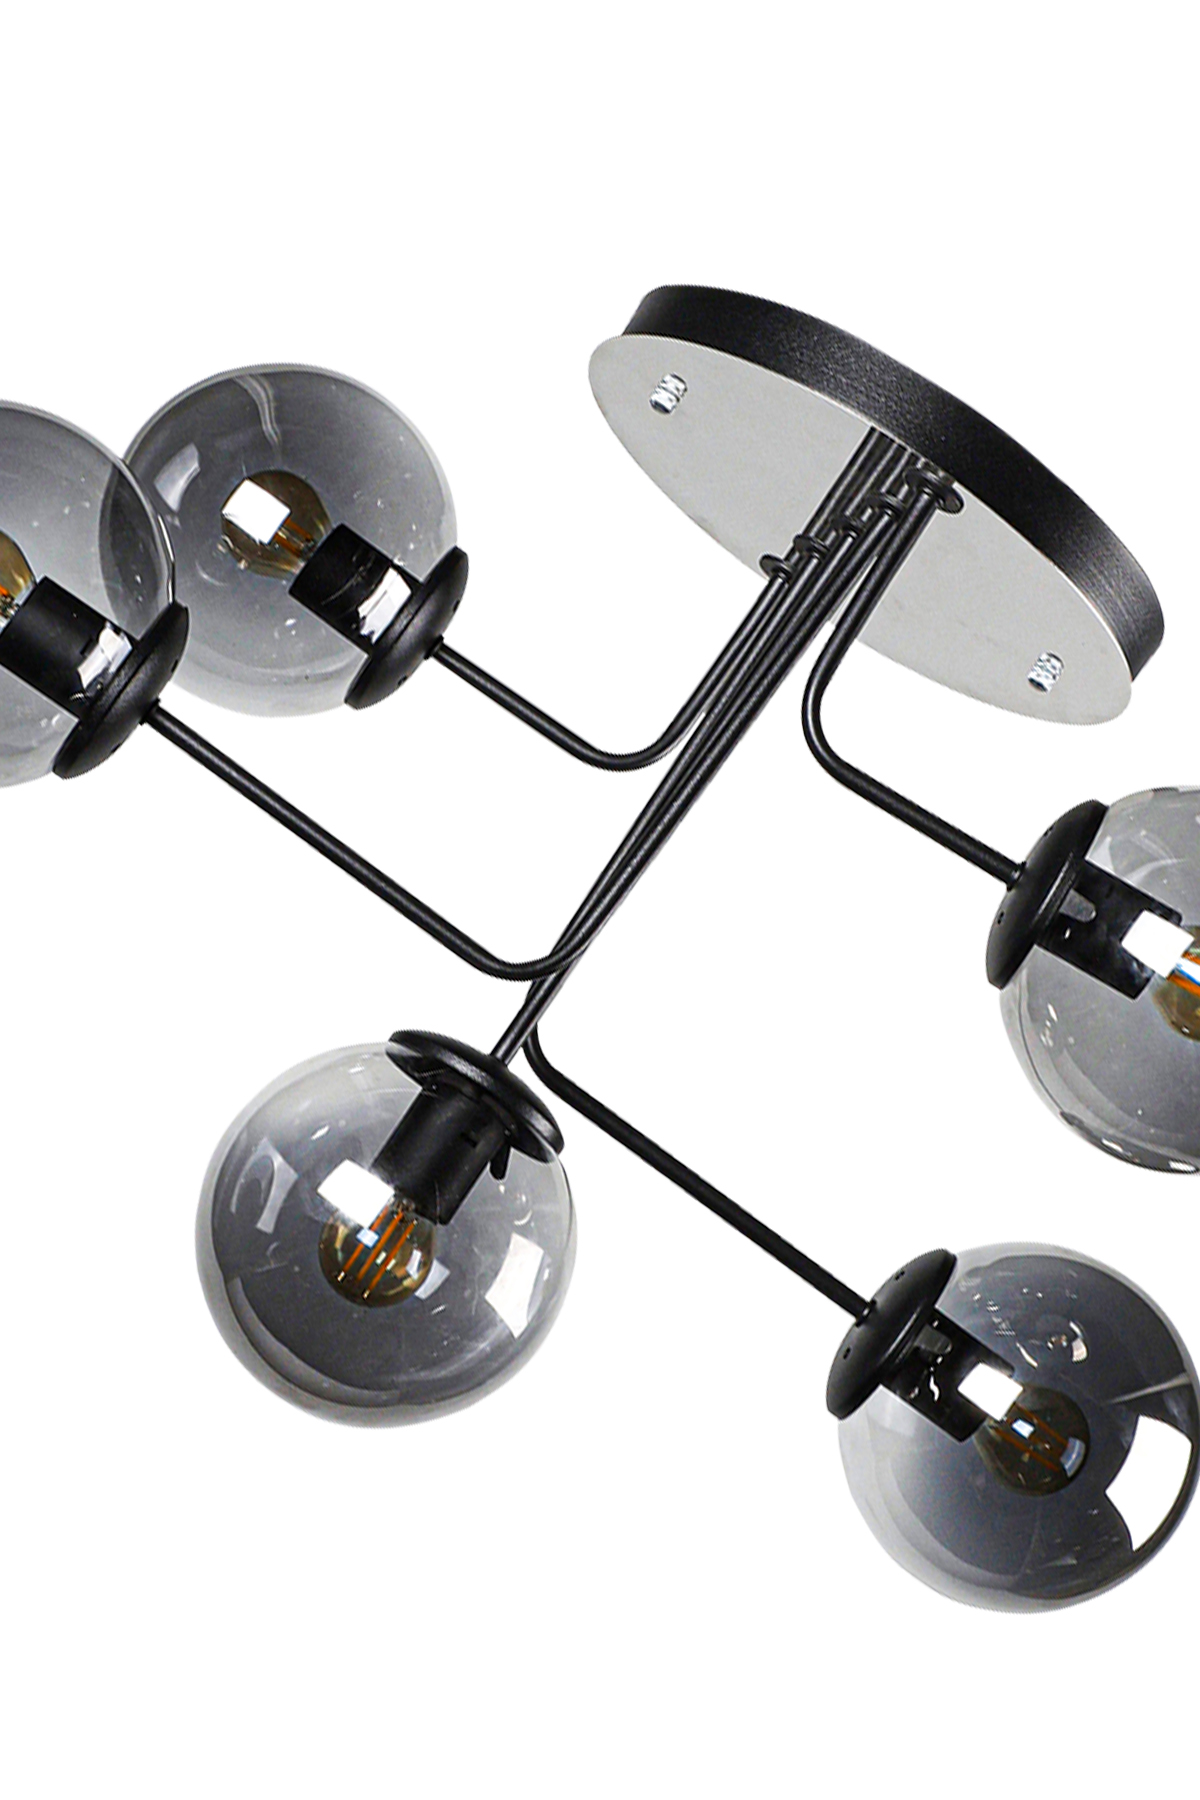 Luxury 5 Ceiling lamp